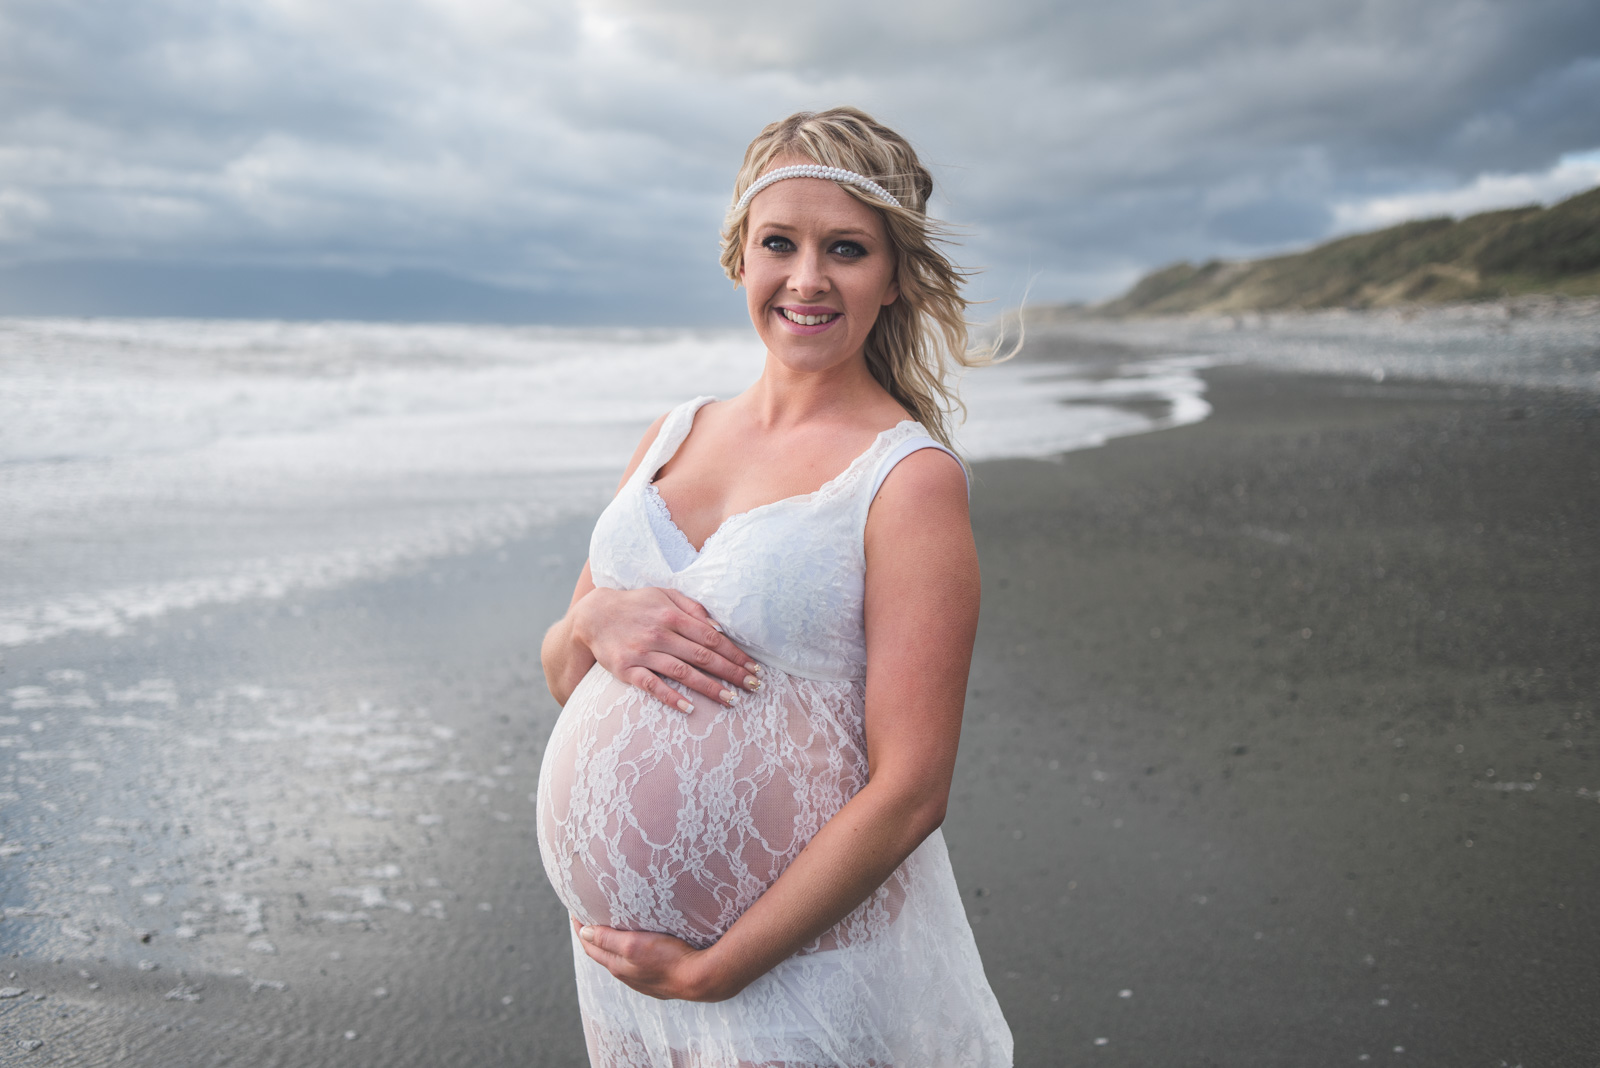 Invercargill-Maternity-Photographer-Beach-Amazing-Landscape-Queenstown-Wanaka-Dunedin-Southland-Beautiful-Stunning-Lace-Dress03